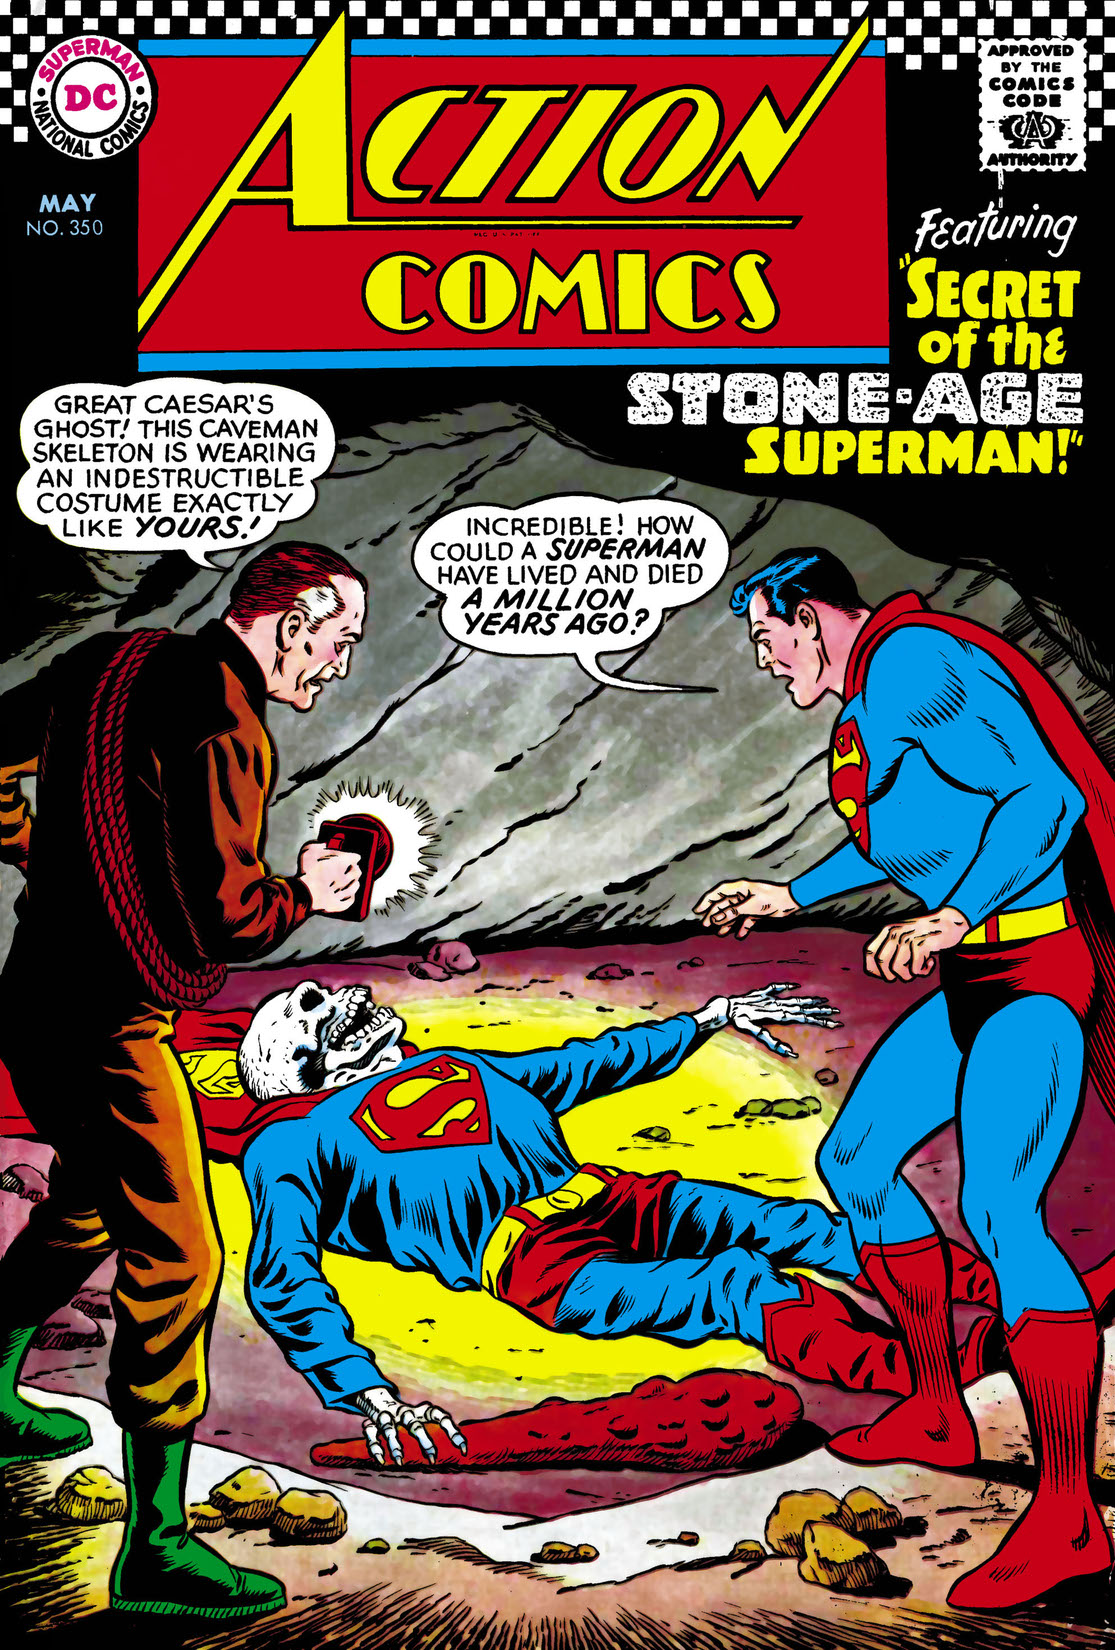 Action Comics (1938-) #350 preview images